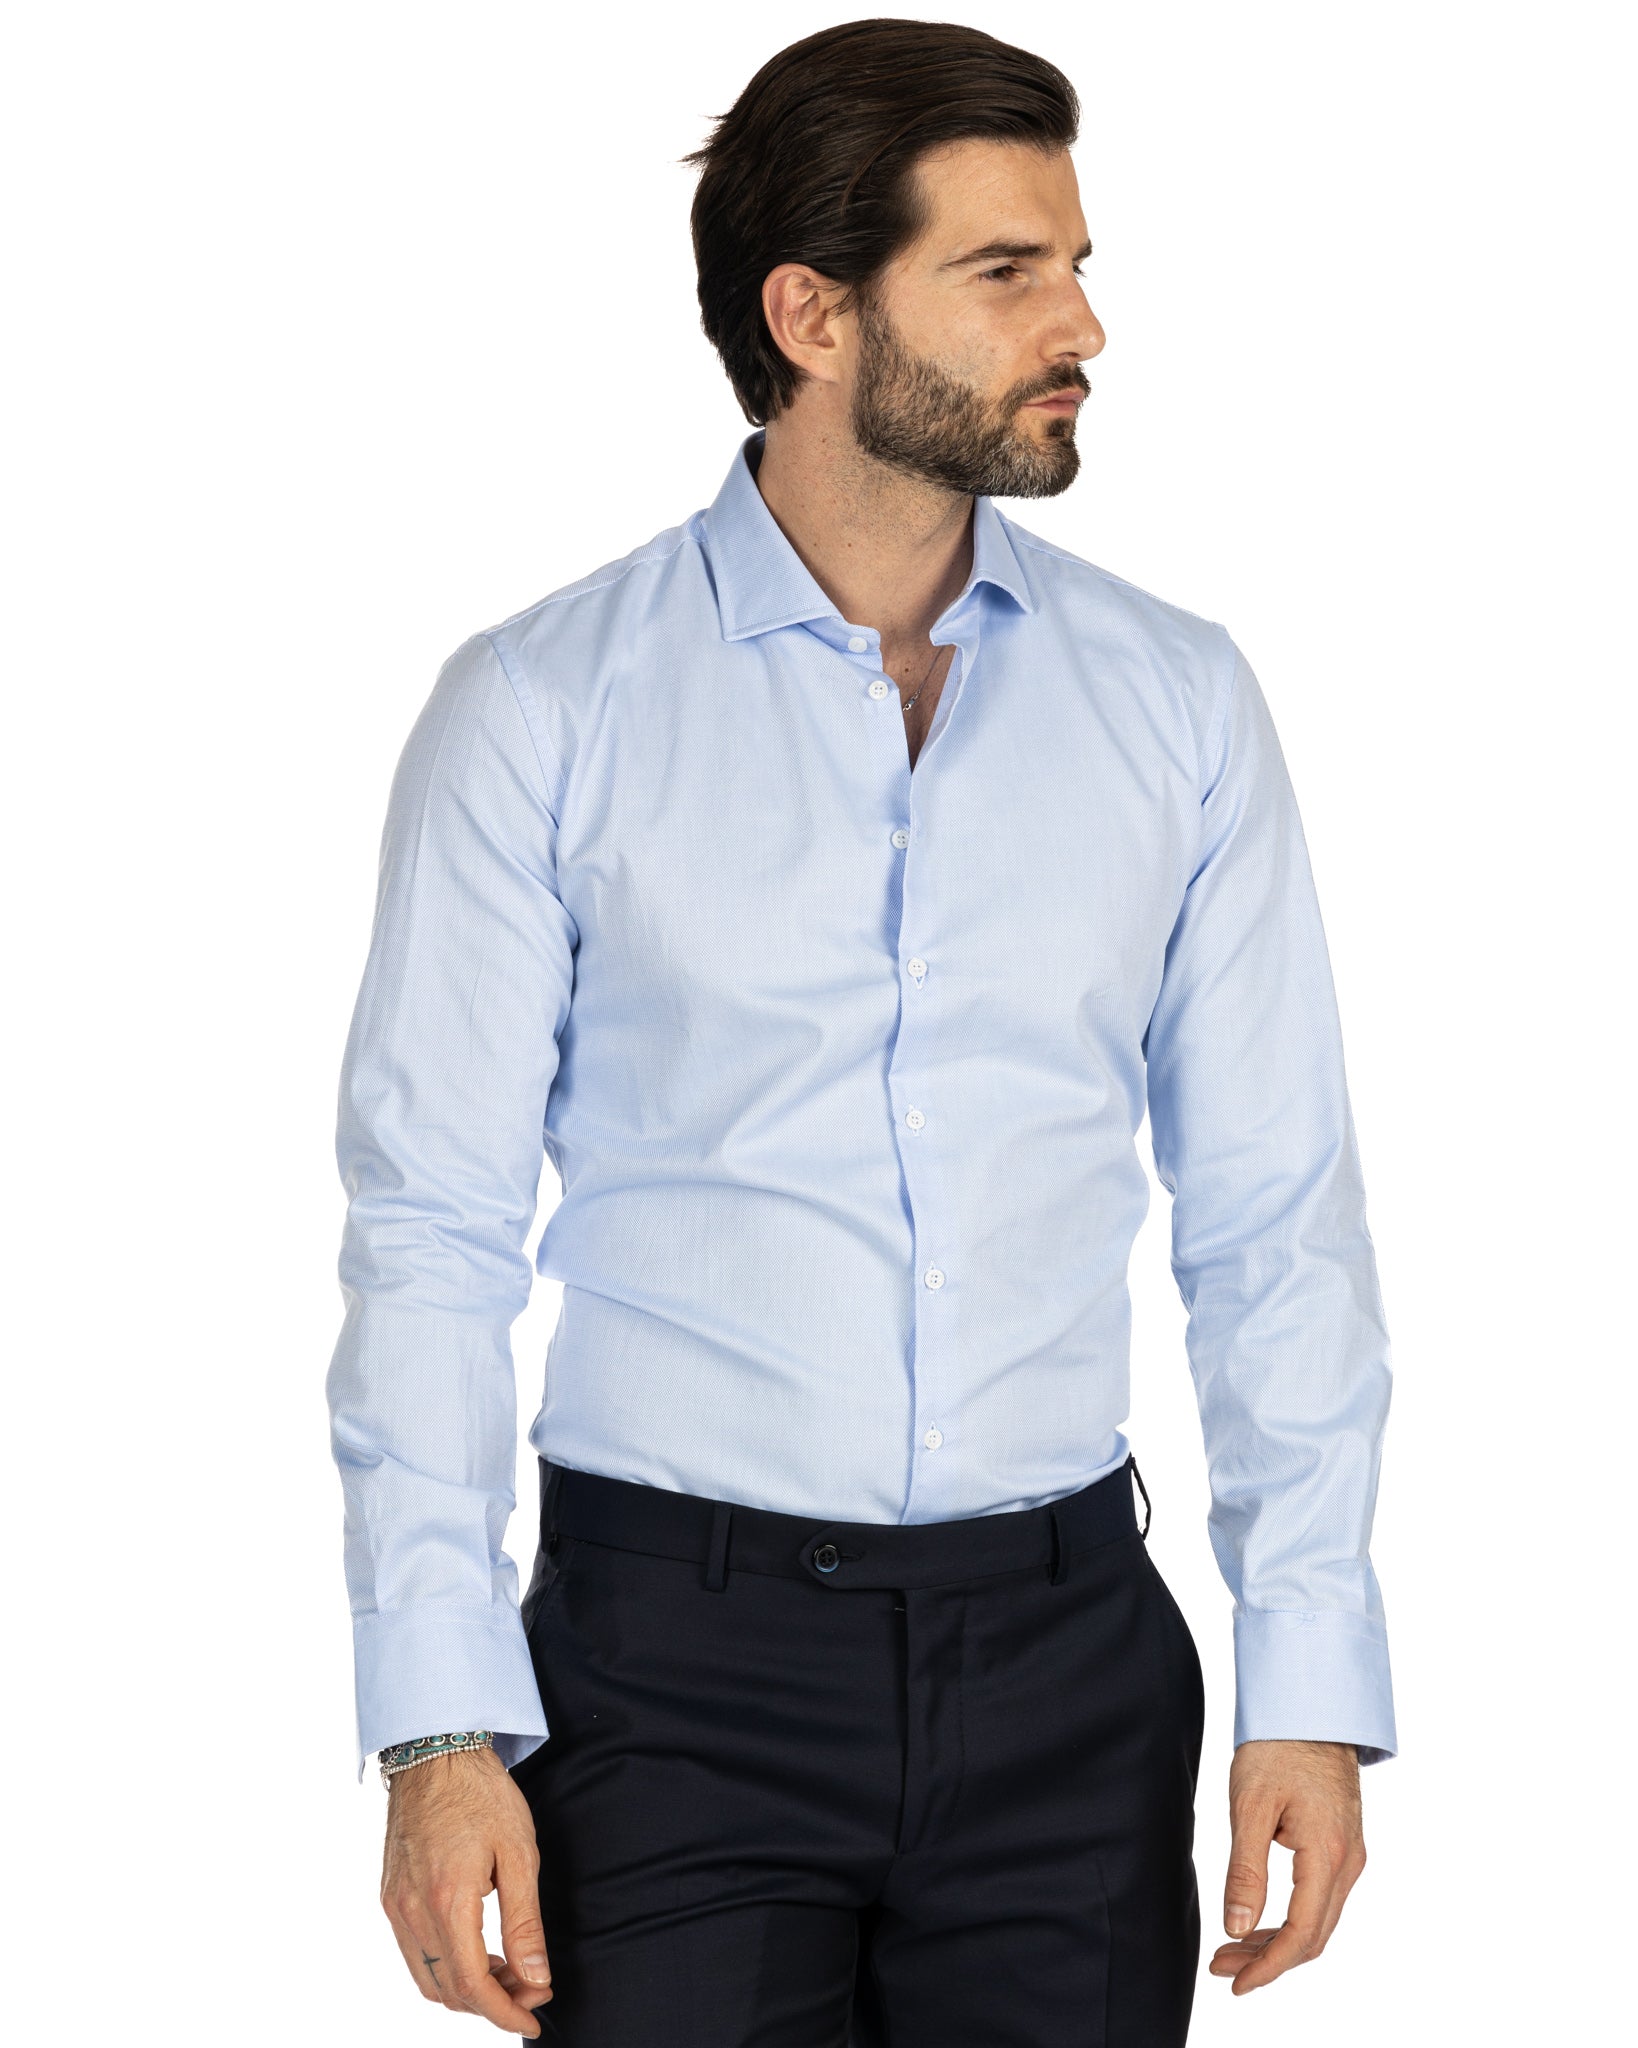 Shirt - slim fit light blue oxford